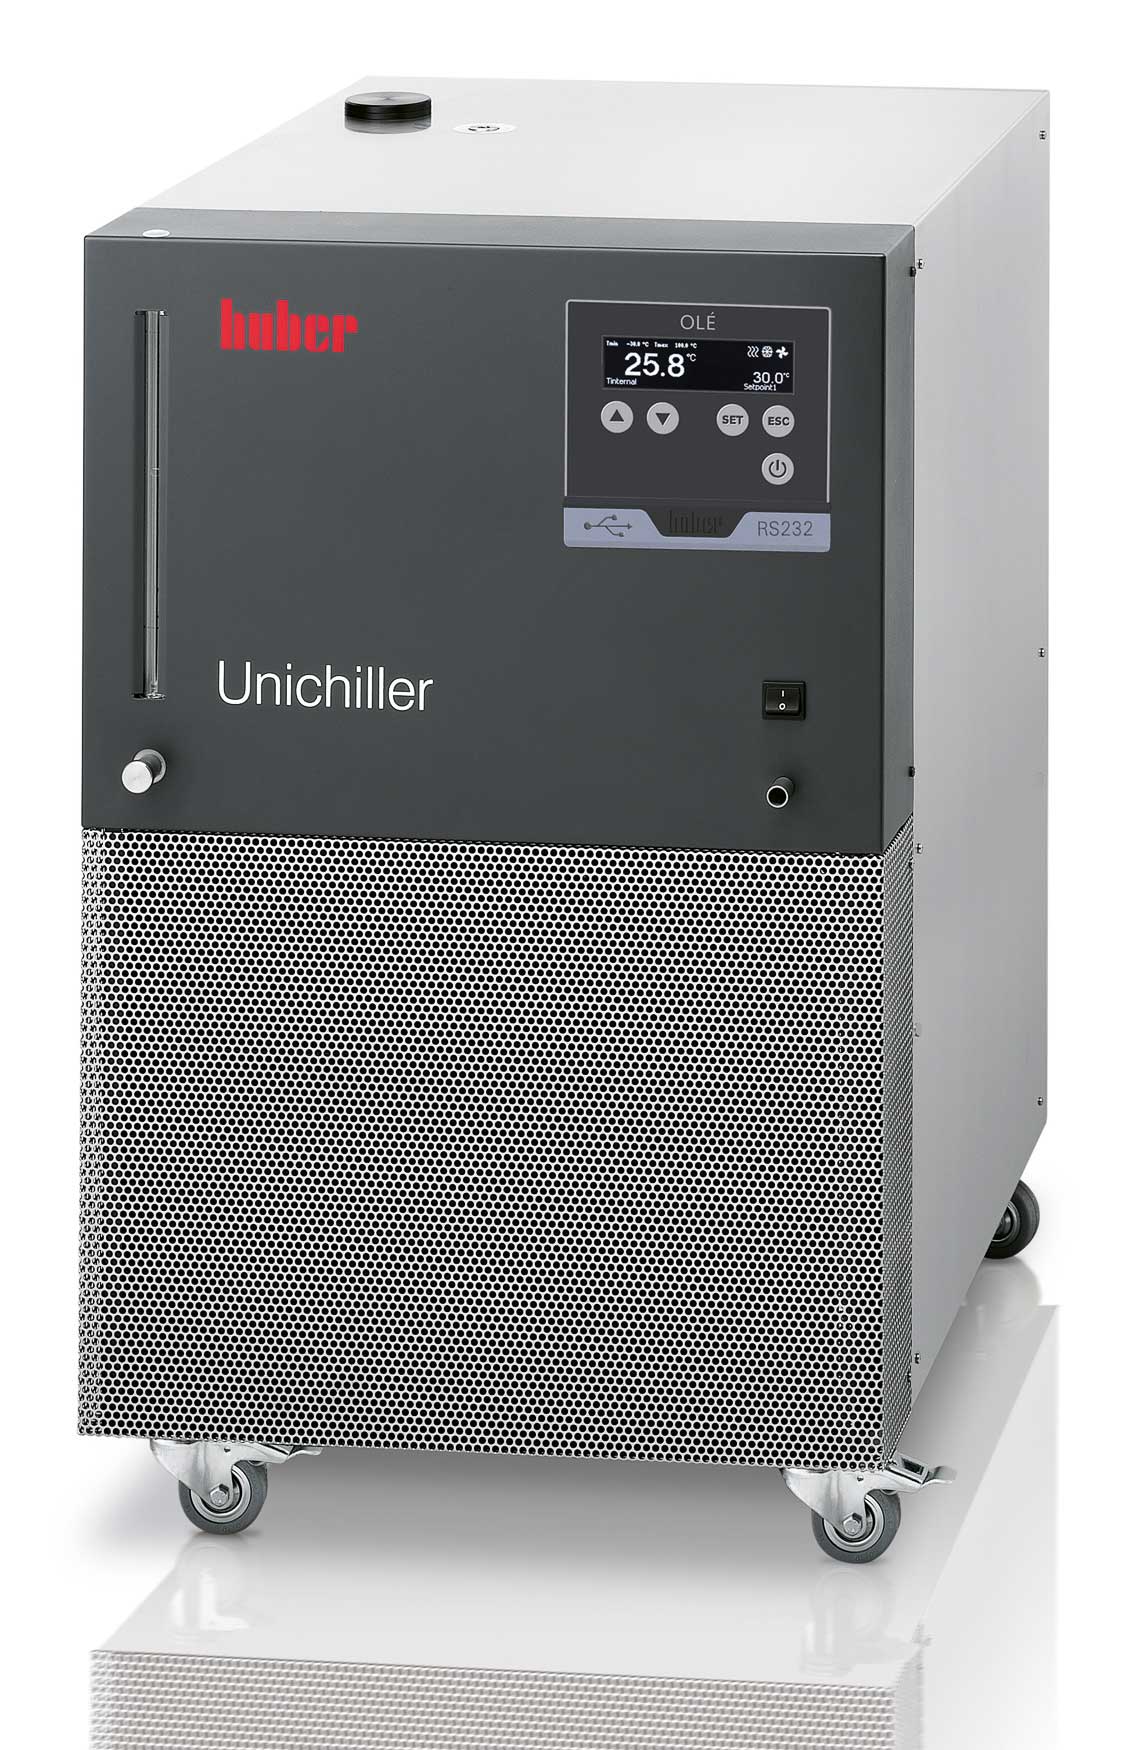 Unichiller 025w OLÉ. HUBER. Con controlador OLÉ y refrigerado por agua. Rango Tª (ºC): De -10 a 40. Estab. Tª (ºC): ±0,5. Potencia frigorífica a -10ºC (W): 1200. Potencia frigorífica a 0ºC (W): 2000. Potencia frigorífica a 15ºC (W): 2500. Presión (l/min) - bar: 29-1. Vol. (l): 3,8. Dim. AnxAlxPr (mm): 420x487x579